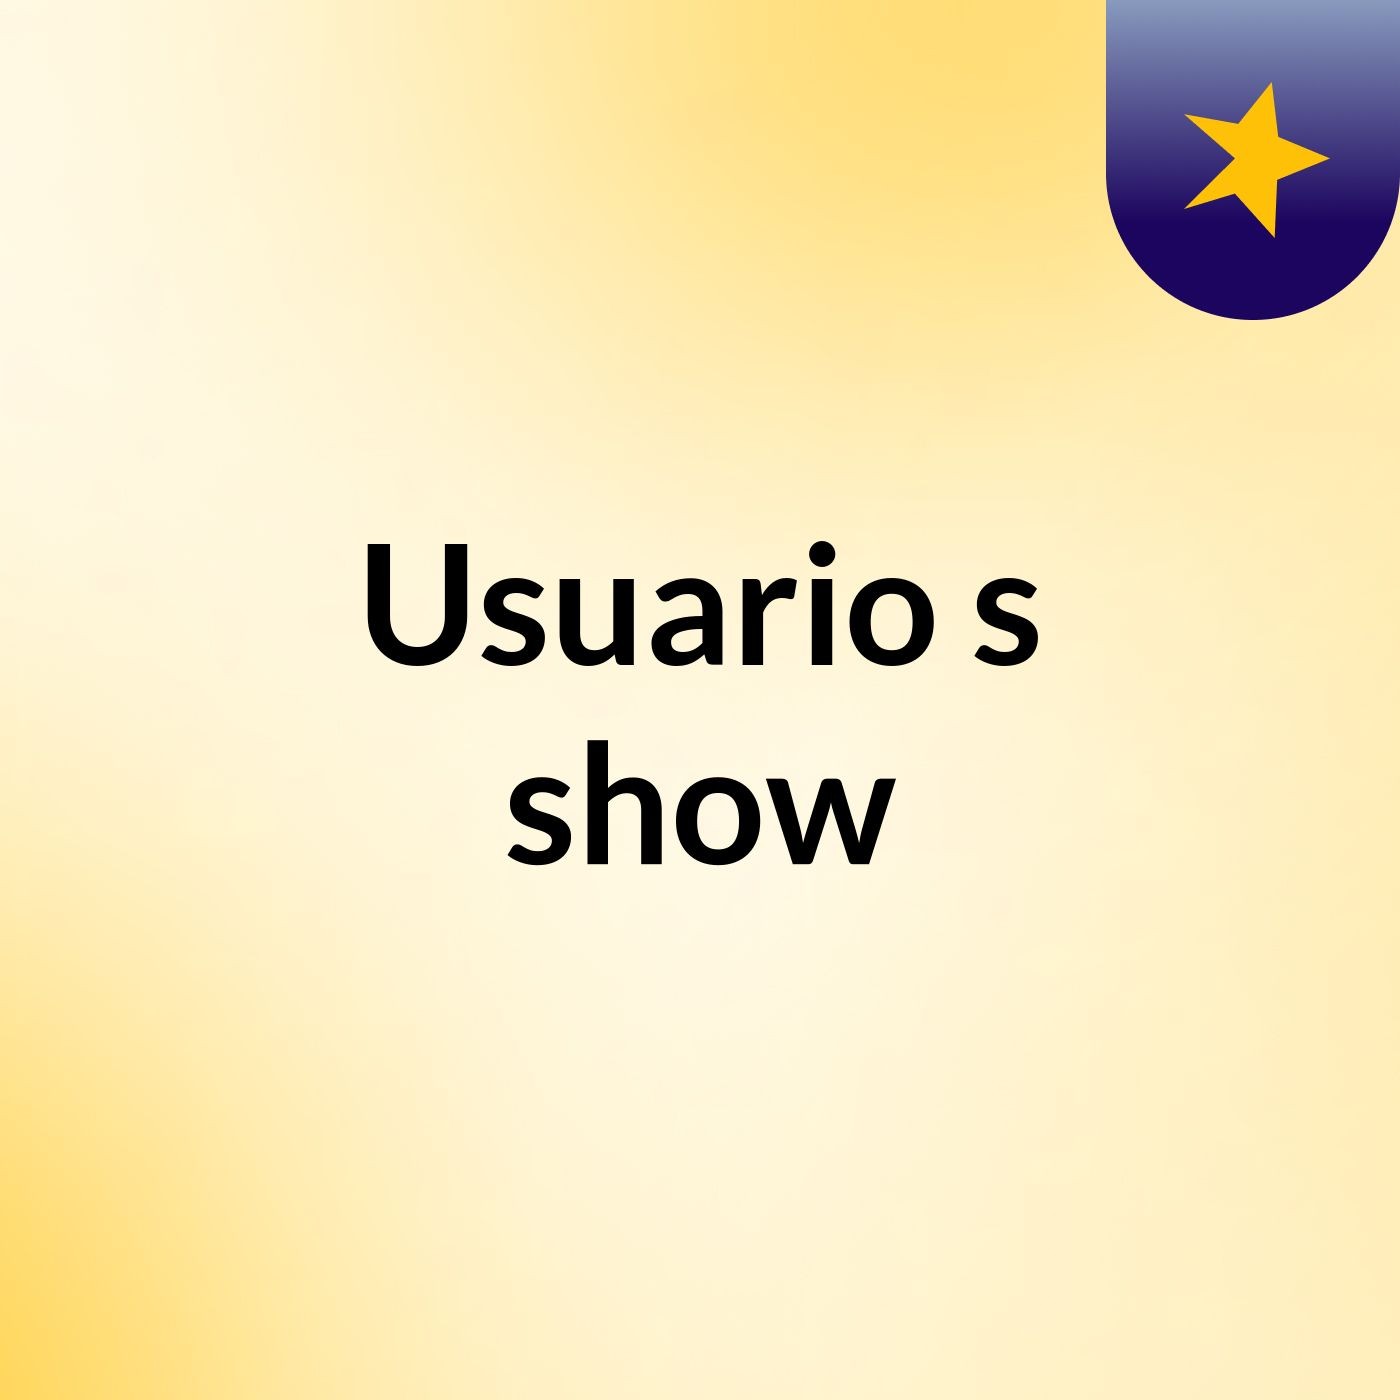 Usuario's show